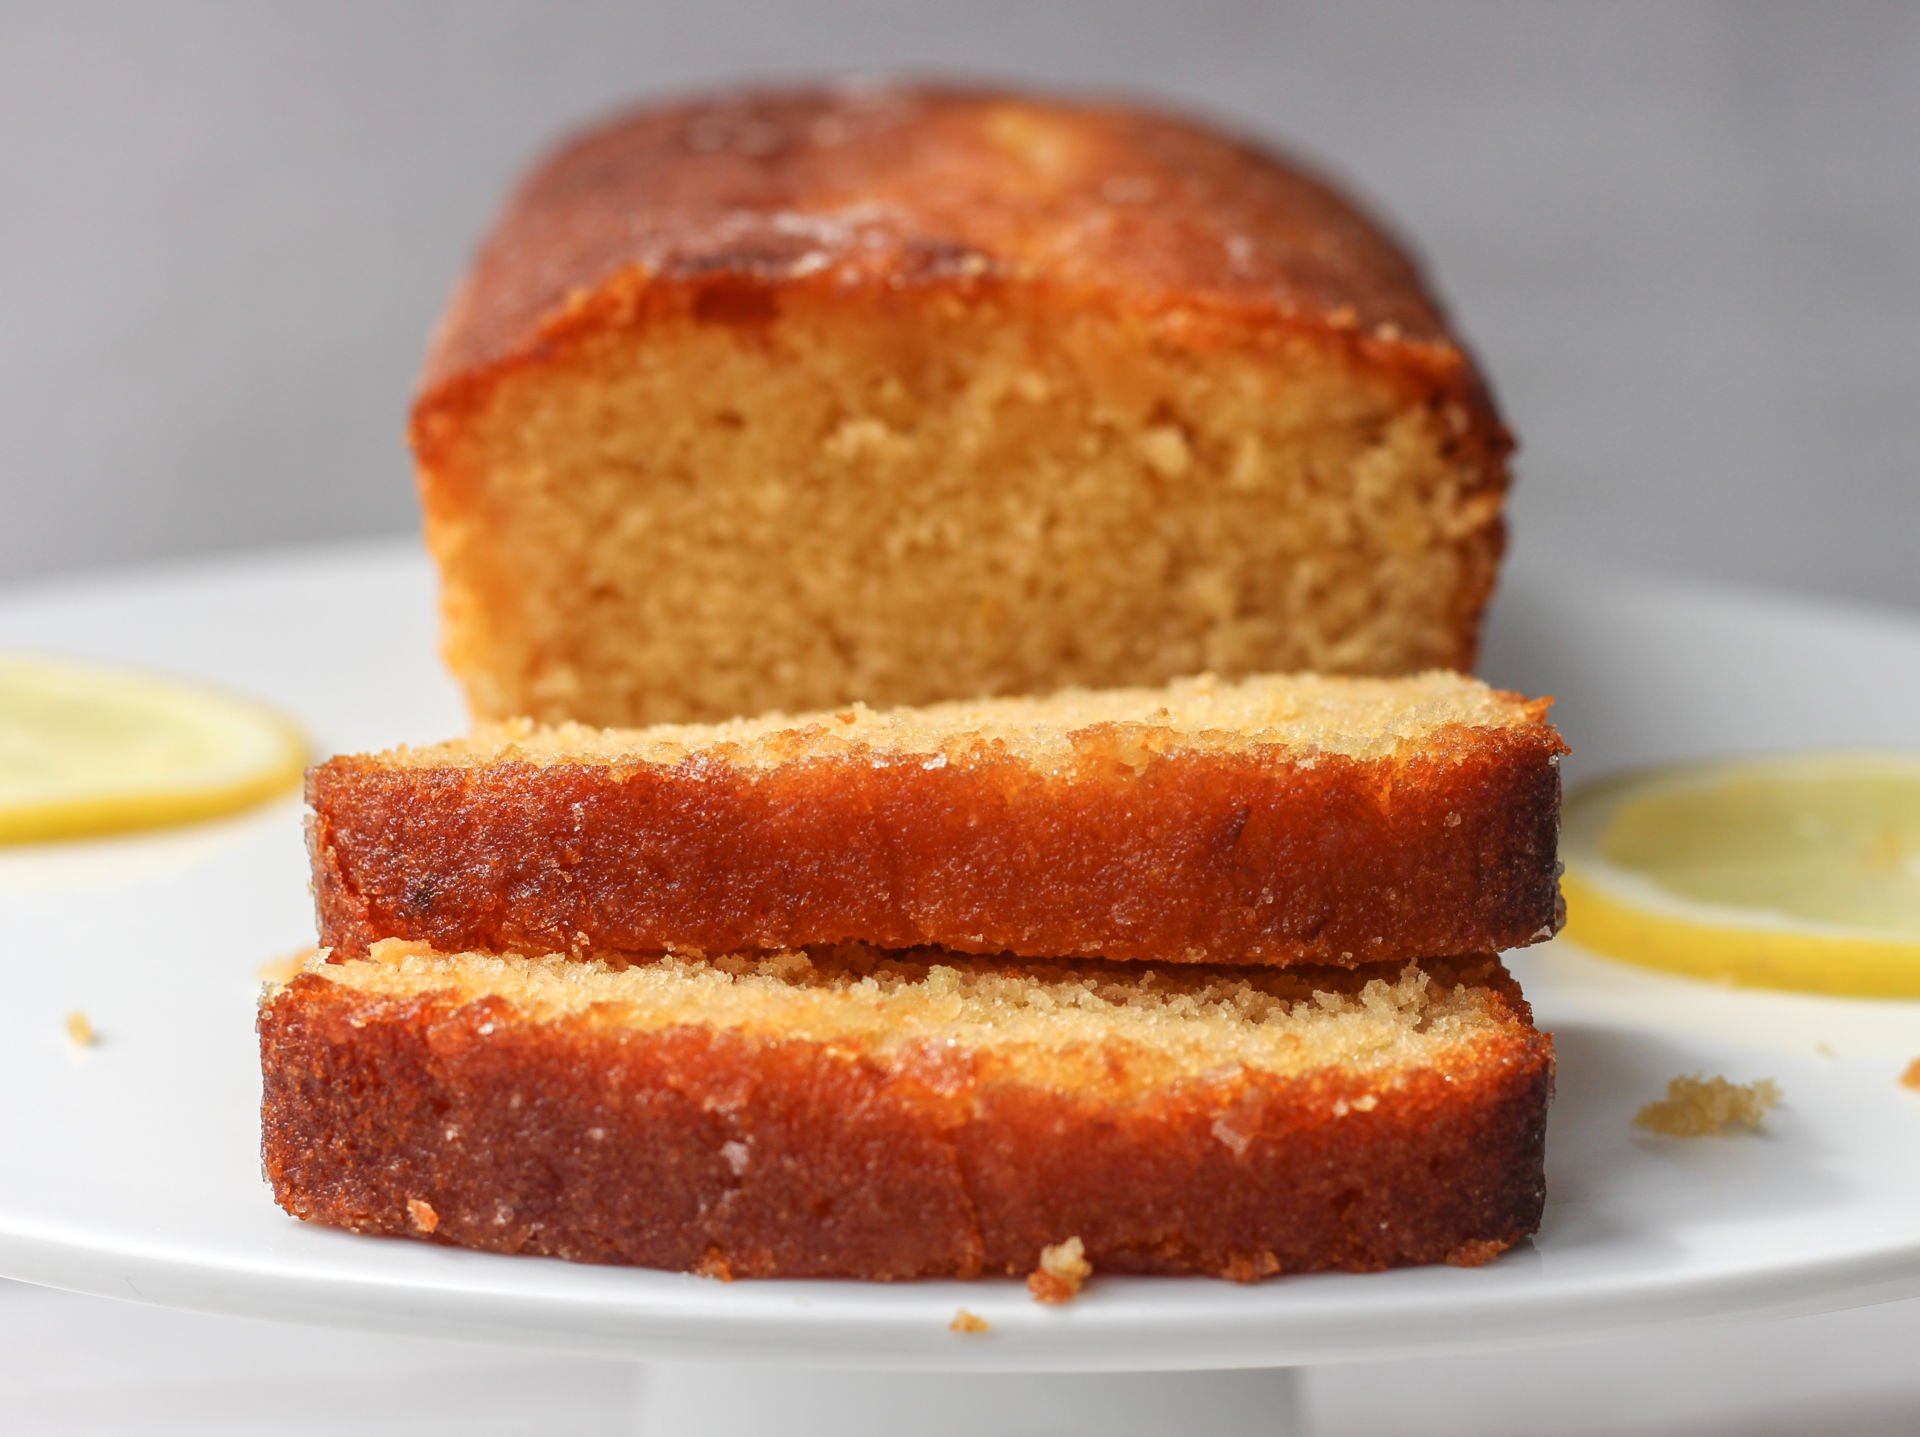 Lemon Drizzle Cake Recipe - Baking Made Simple by Bakeomaniac